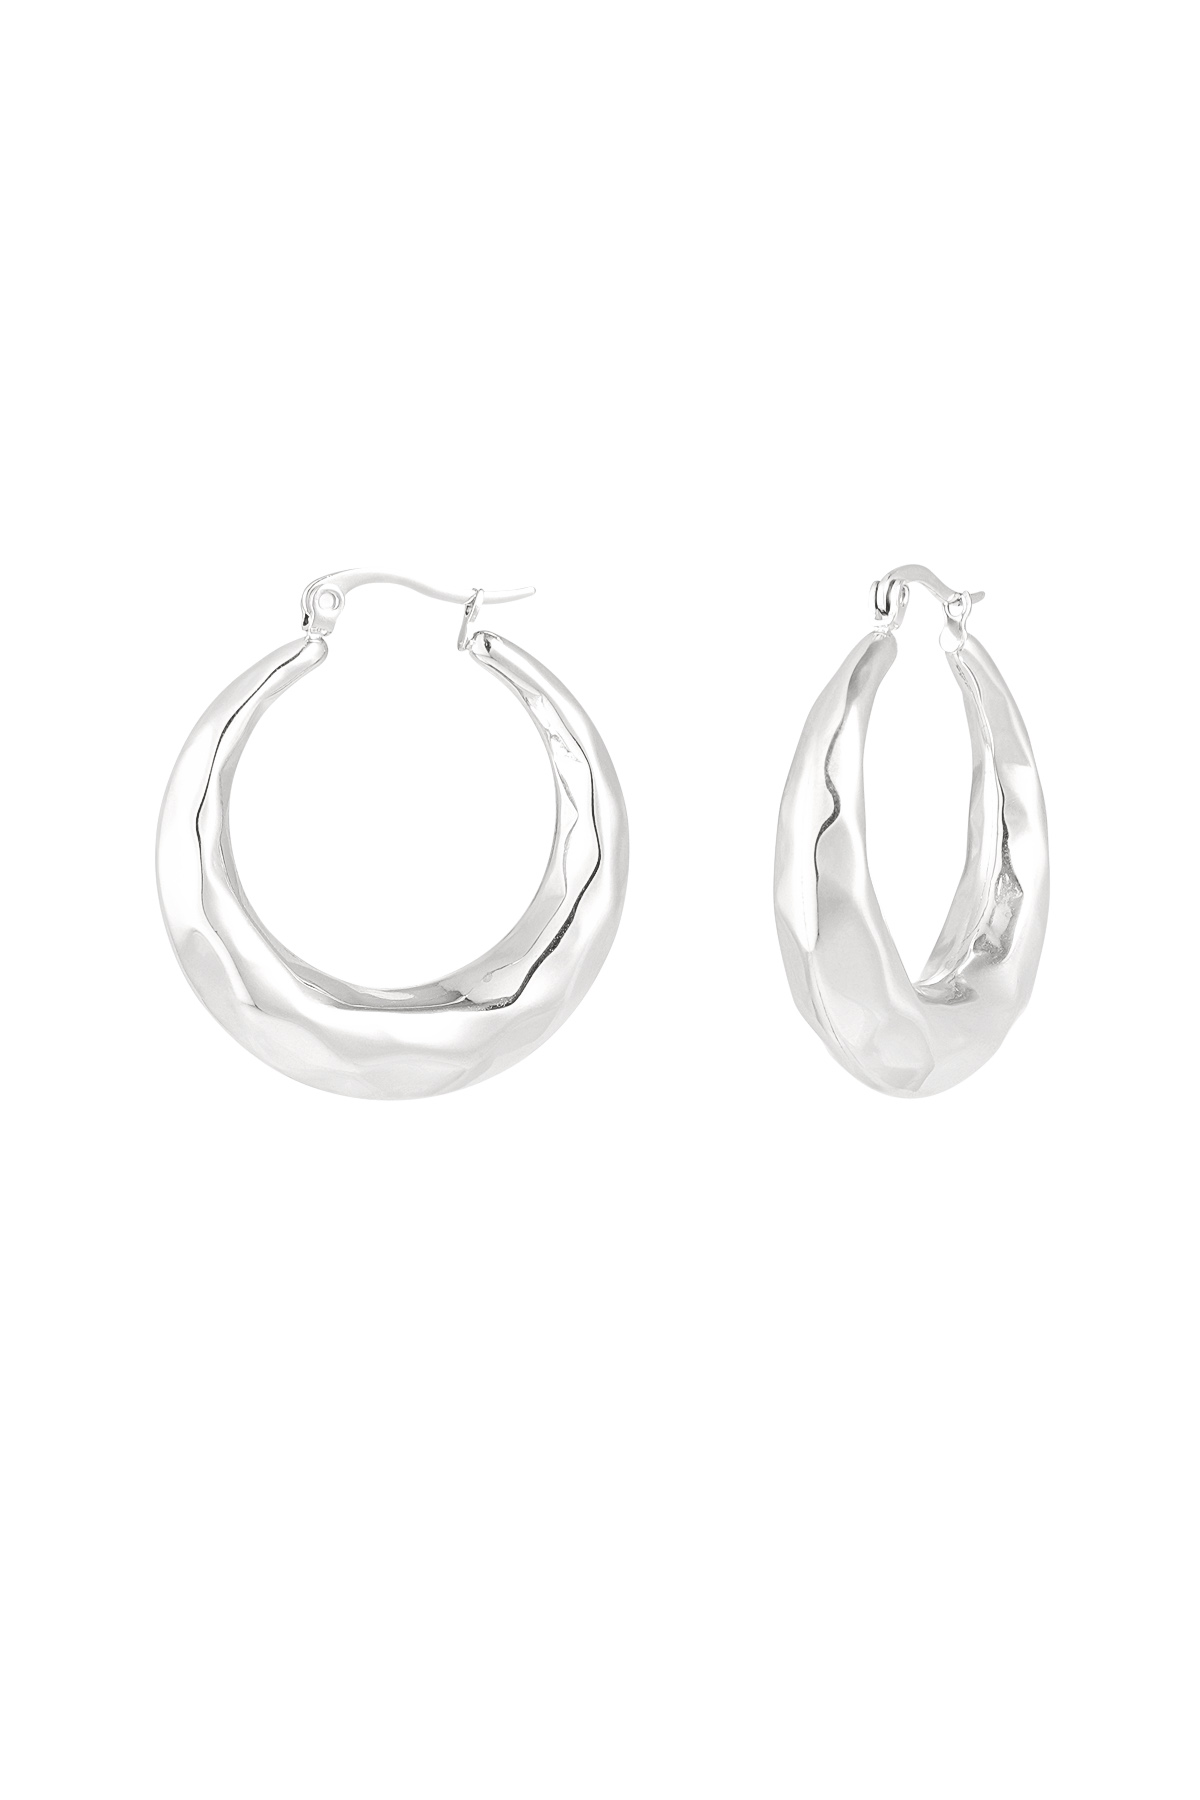 Runde Ohrringe mit Dellenmotiv – Silber